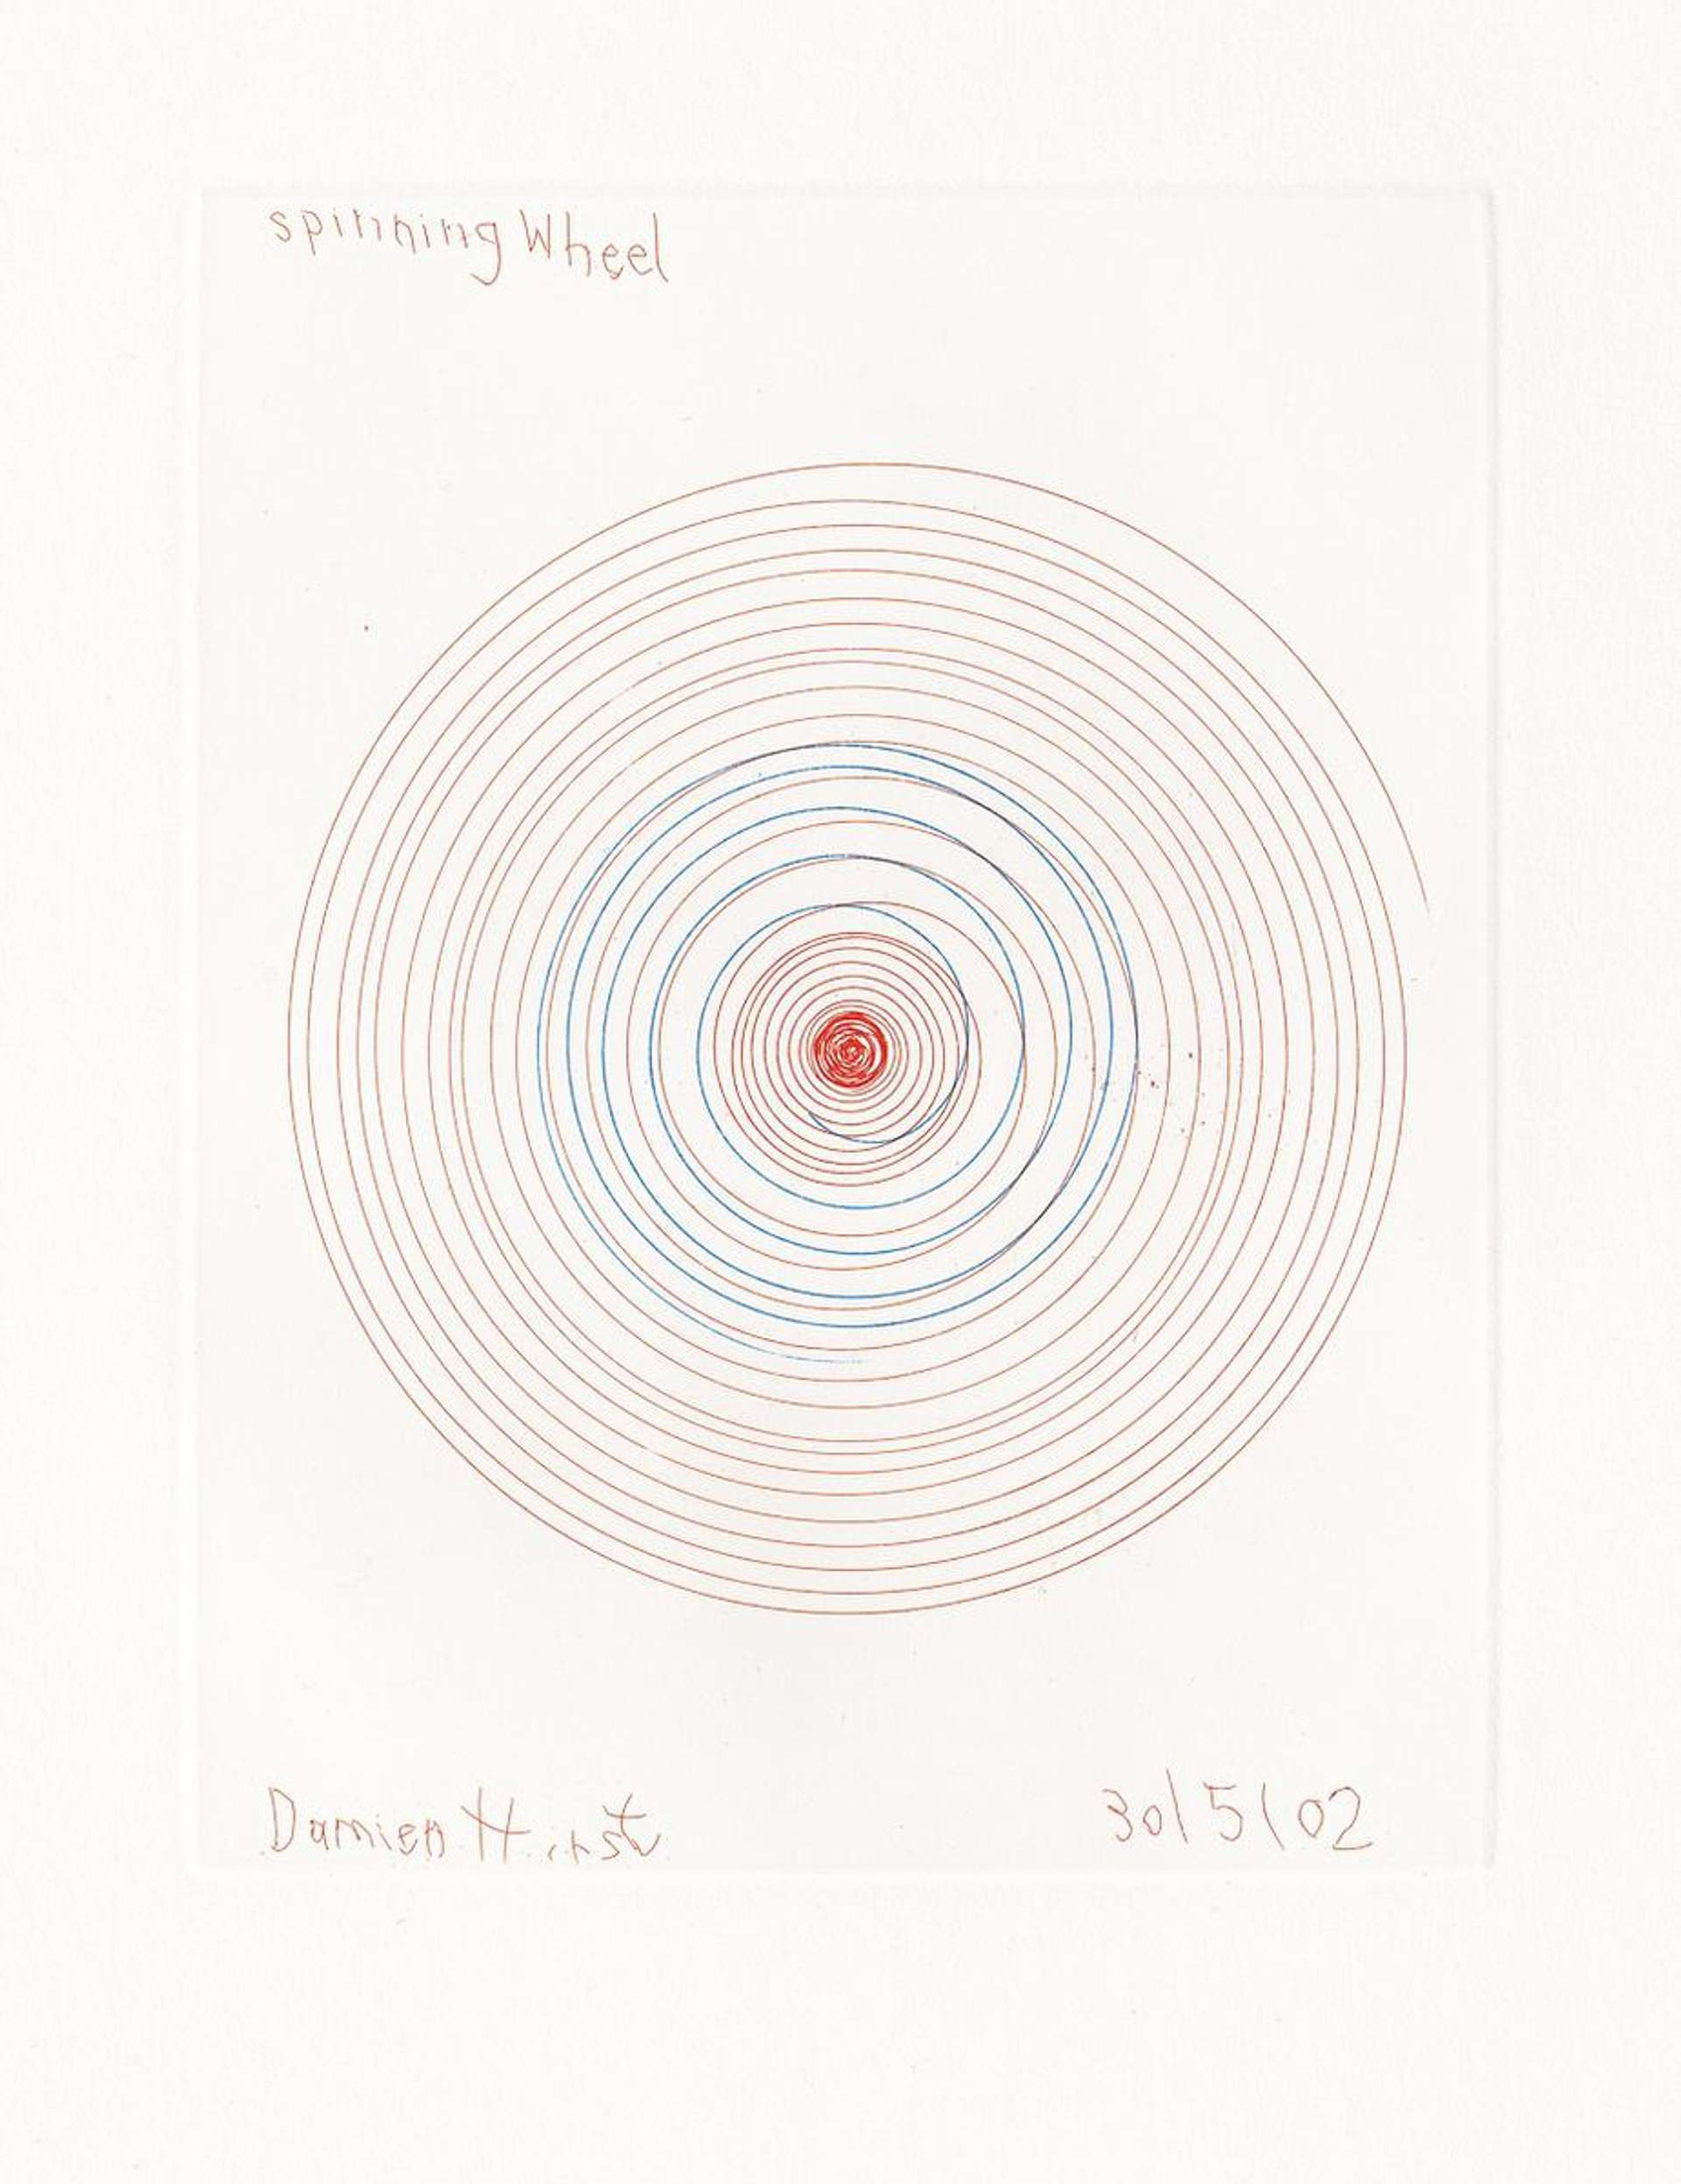 Spinning Wheel - Signed Print by Damien Hirst 2002 - MyArtBroker